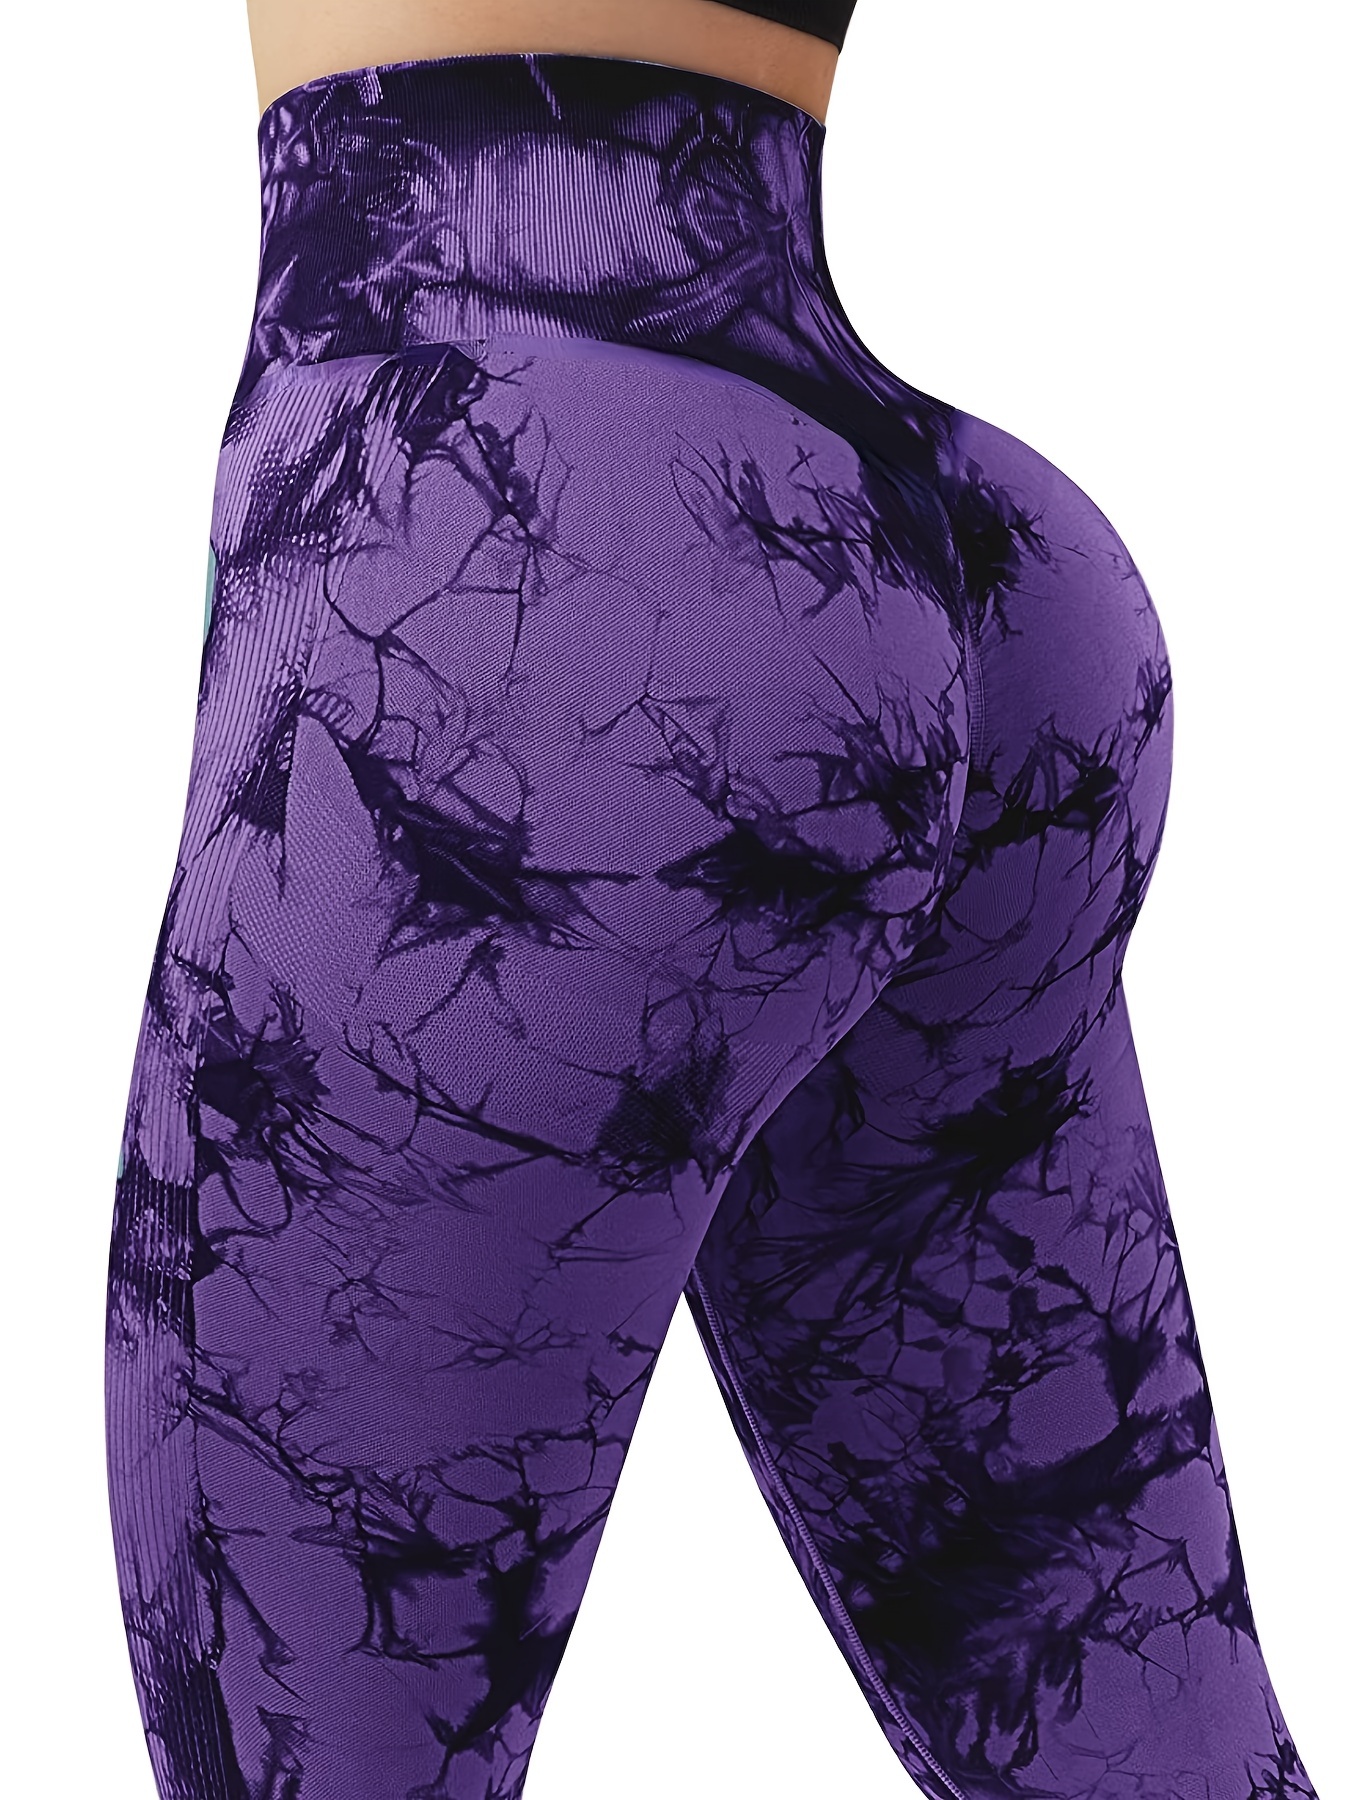 OMKAGI Women Scrunch Butt Lifting Leggings Seamless High Waisted Workout  Yoga Pants(S,88-Orchid Purple)